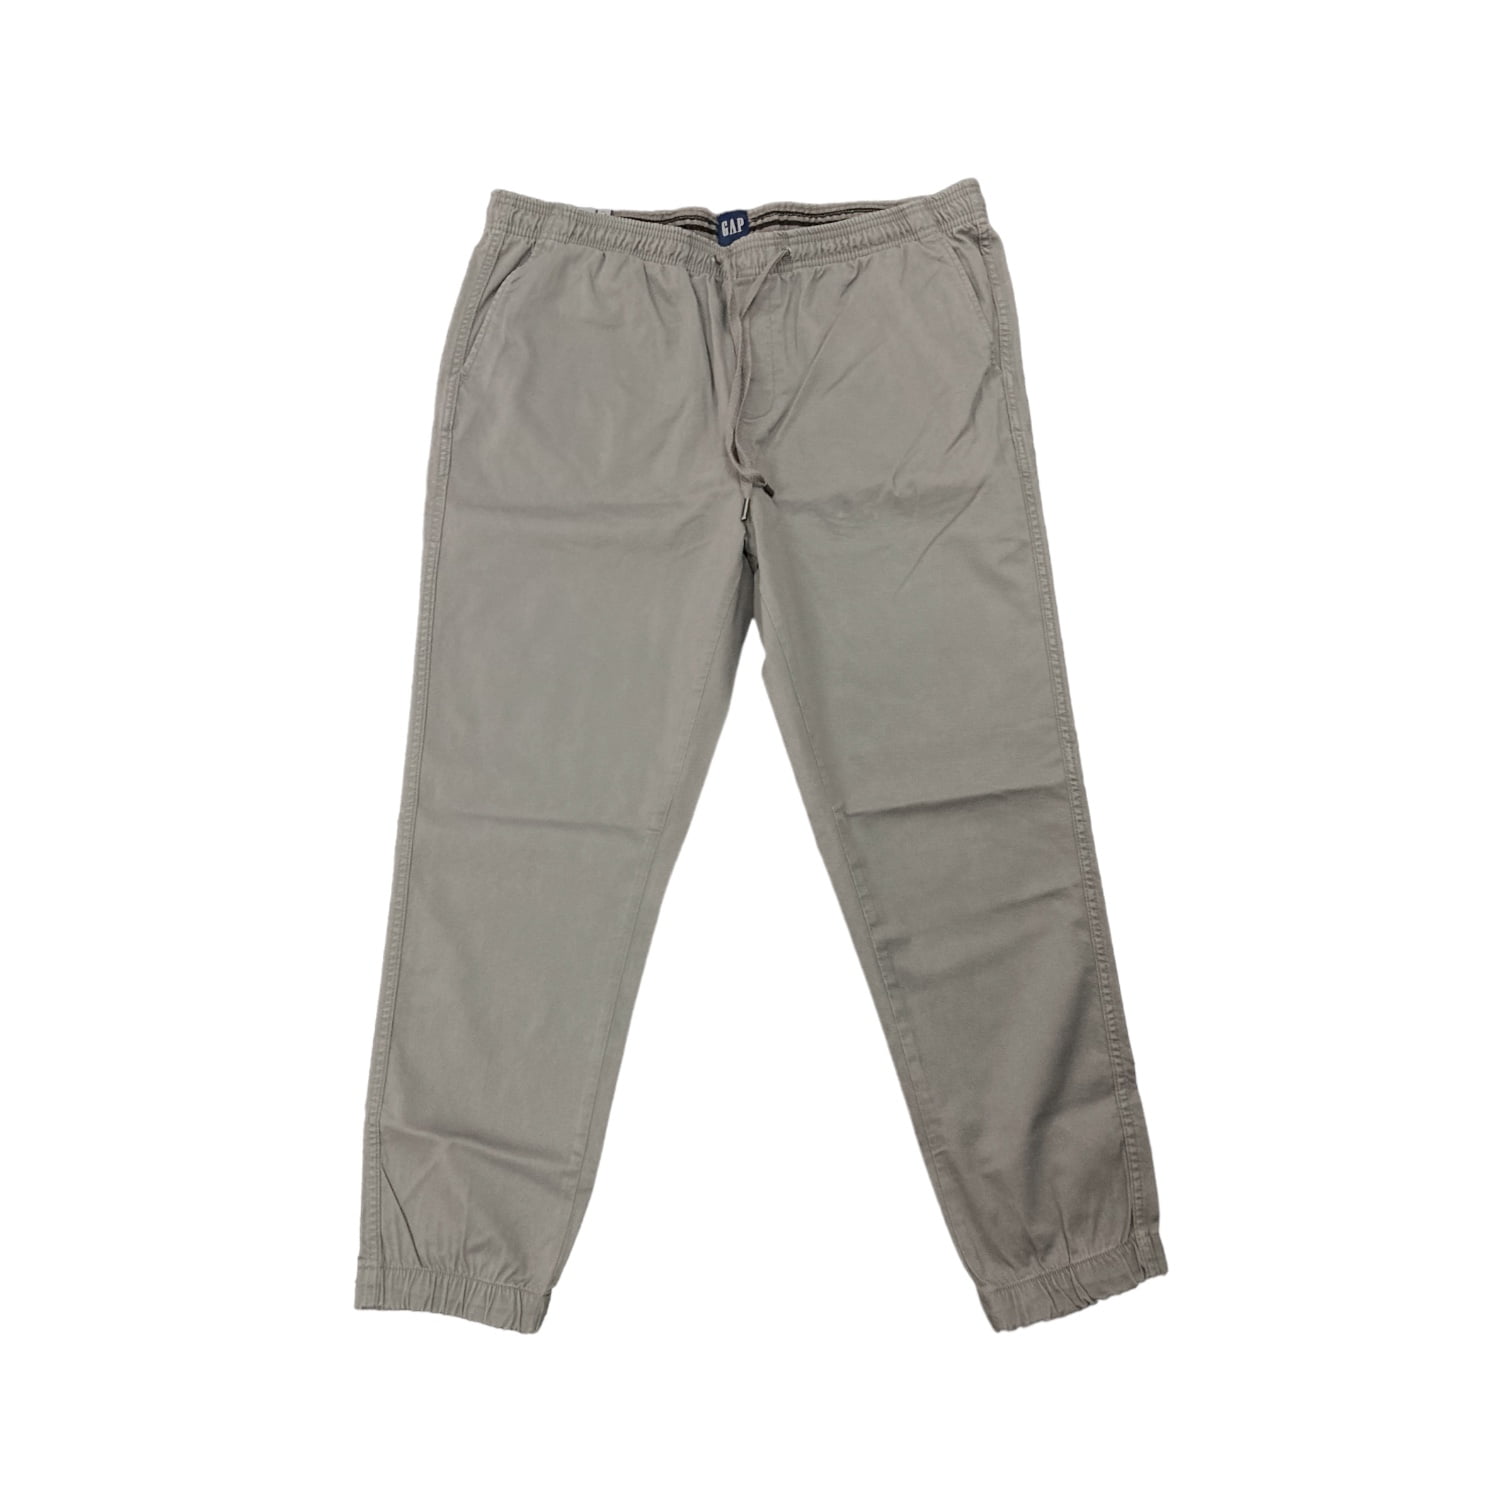 Gap Men's Pants Tan Khaki Straight Leg Work Dress Slacks - clothing &  accessories - by owner - apparel sale - craigslist